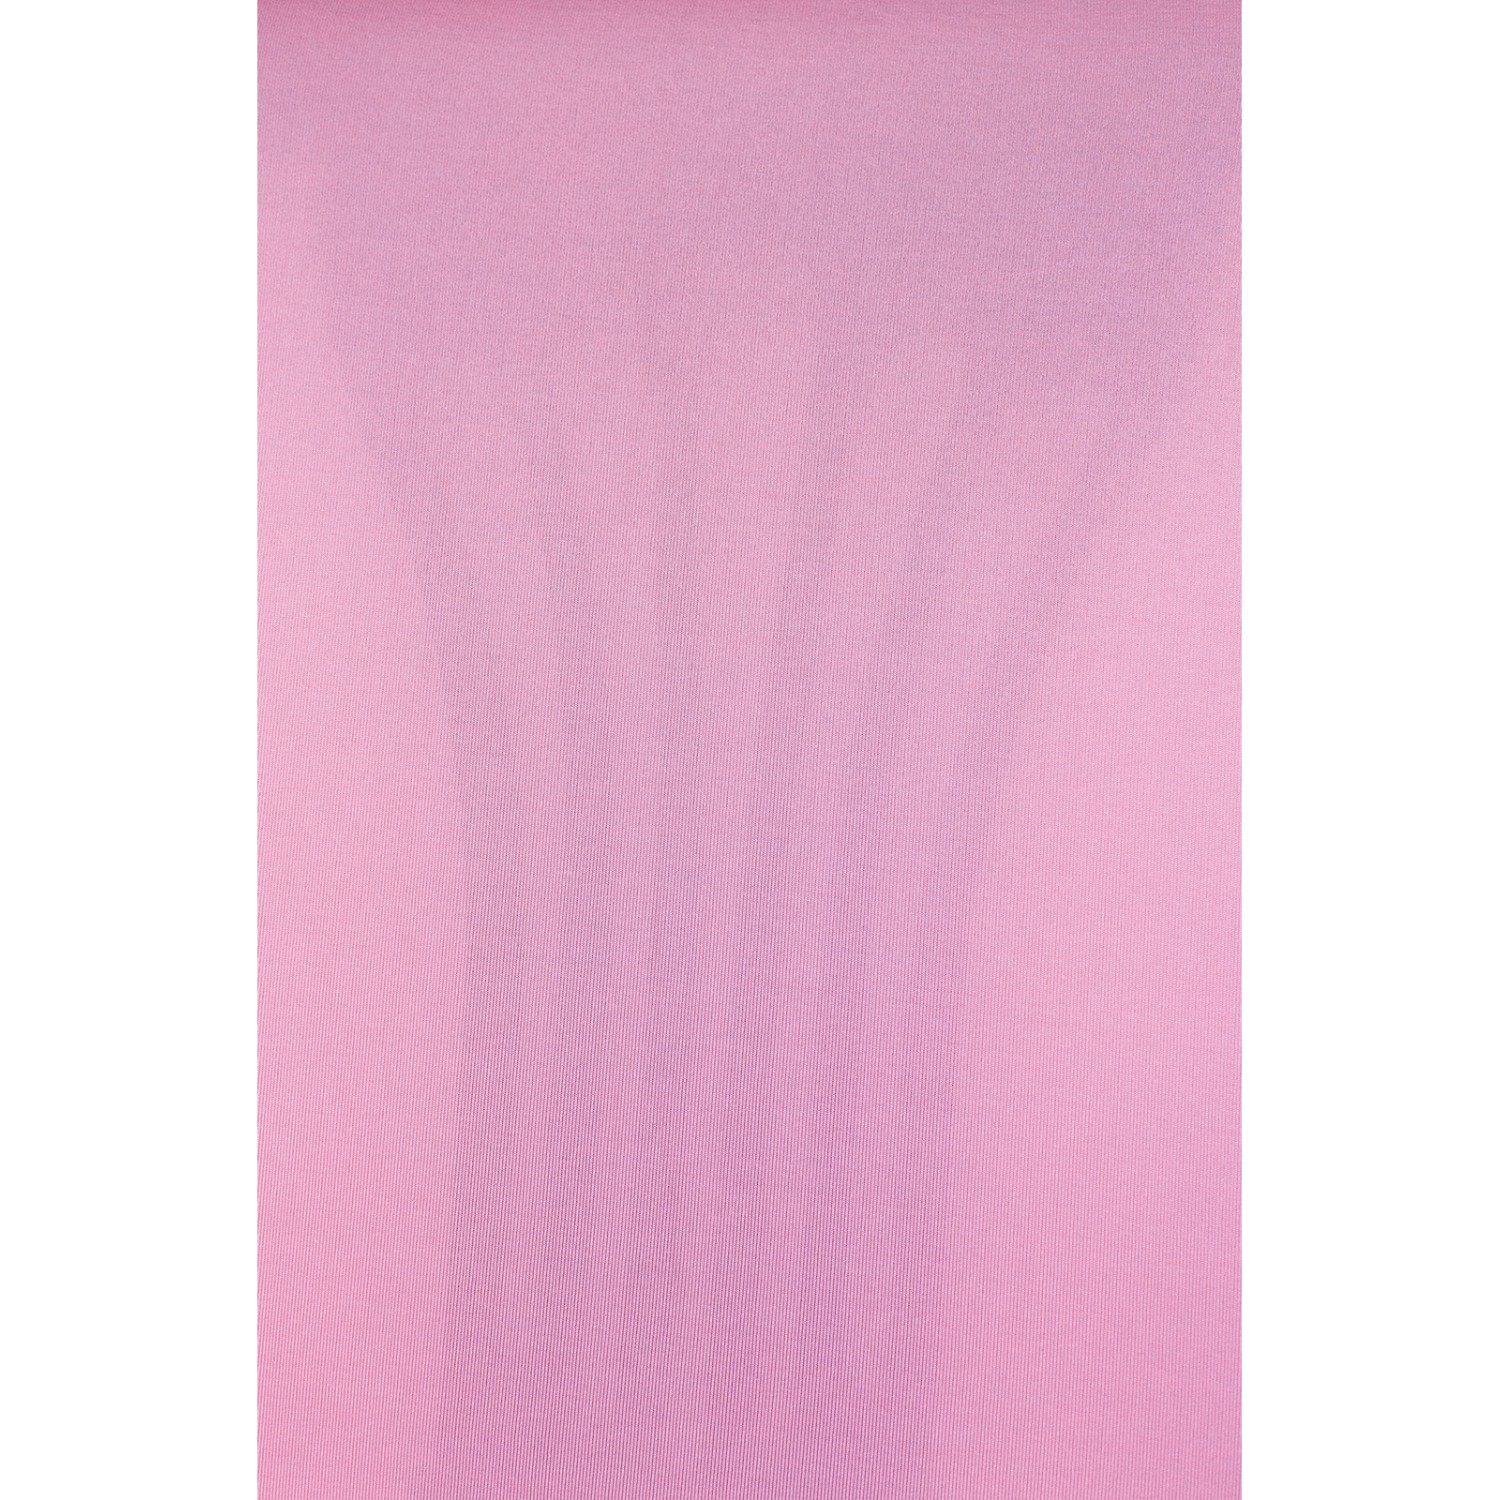 Чехол на стул LuxAlto Коллекция Jersey розовый - фото 11